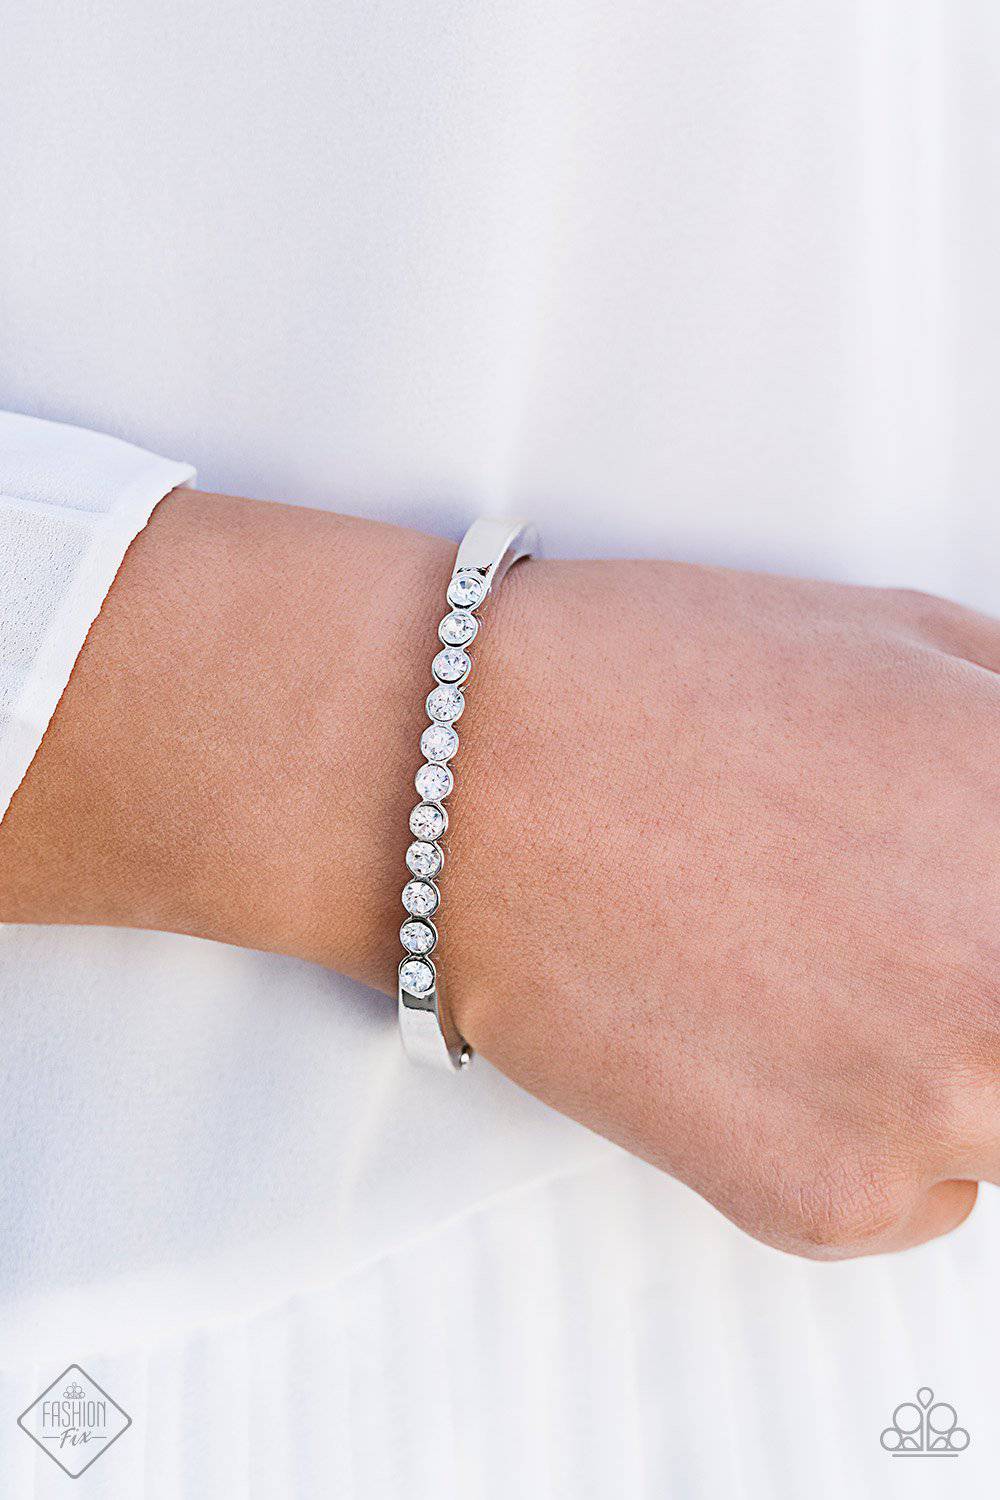 Totally Trillionaire - White Rhinestone Bracelet - Paparazzi Accessories - GlaMarous Titi Jewels